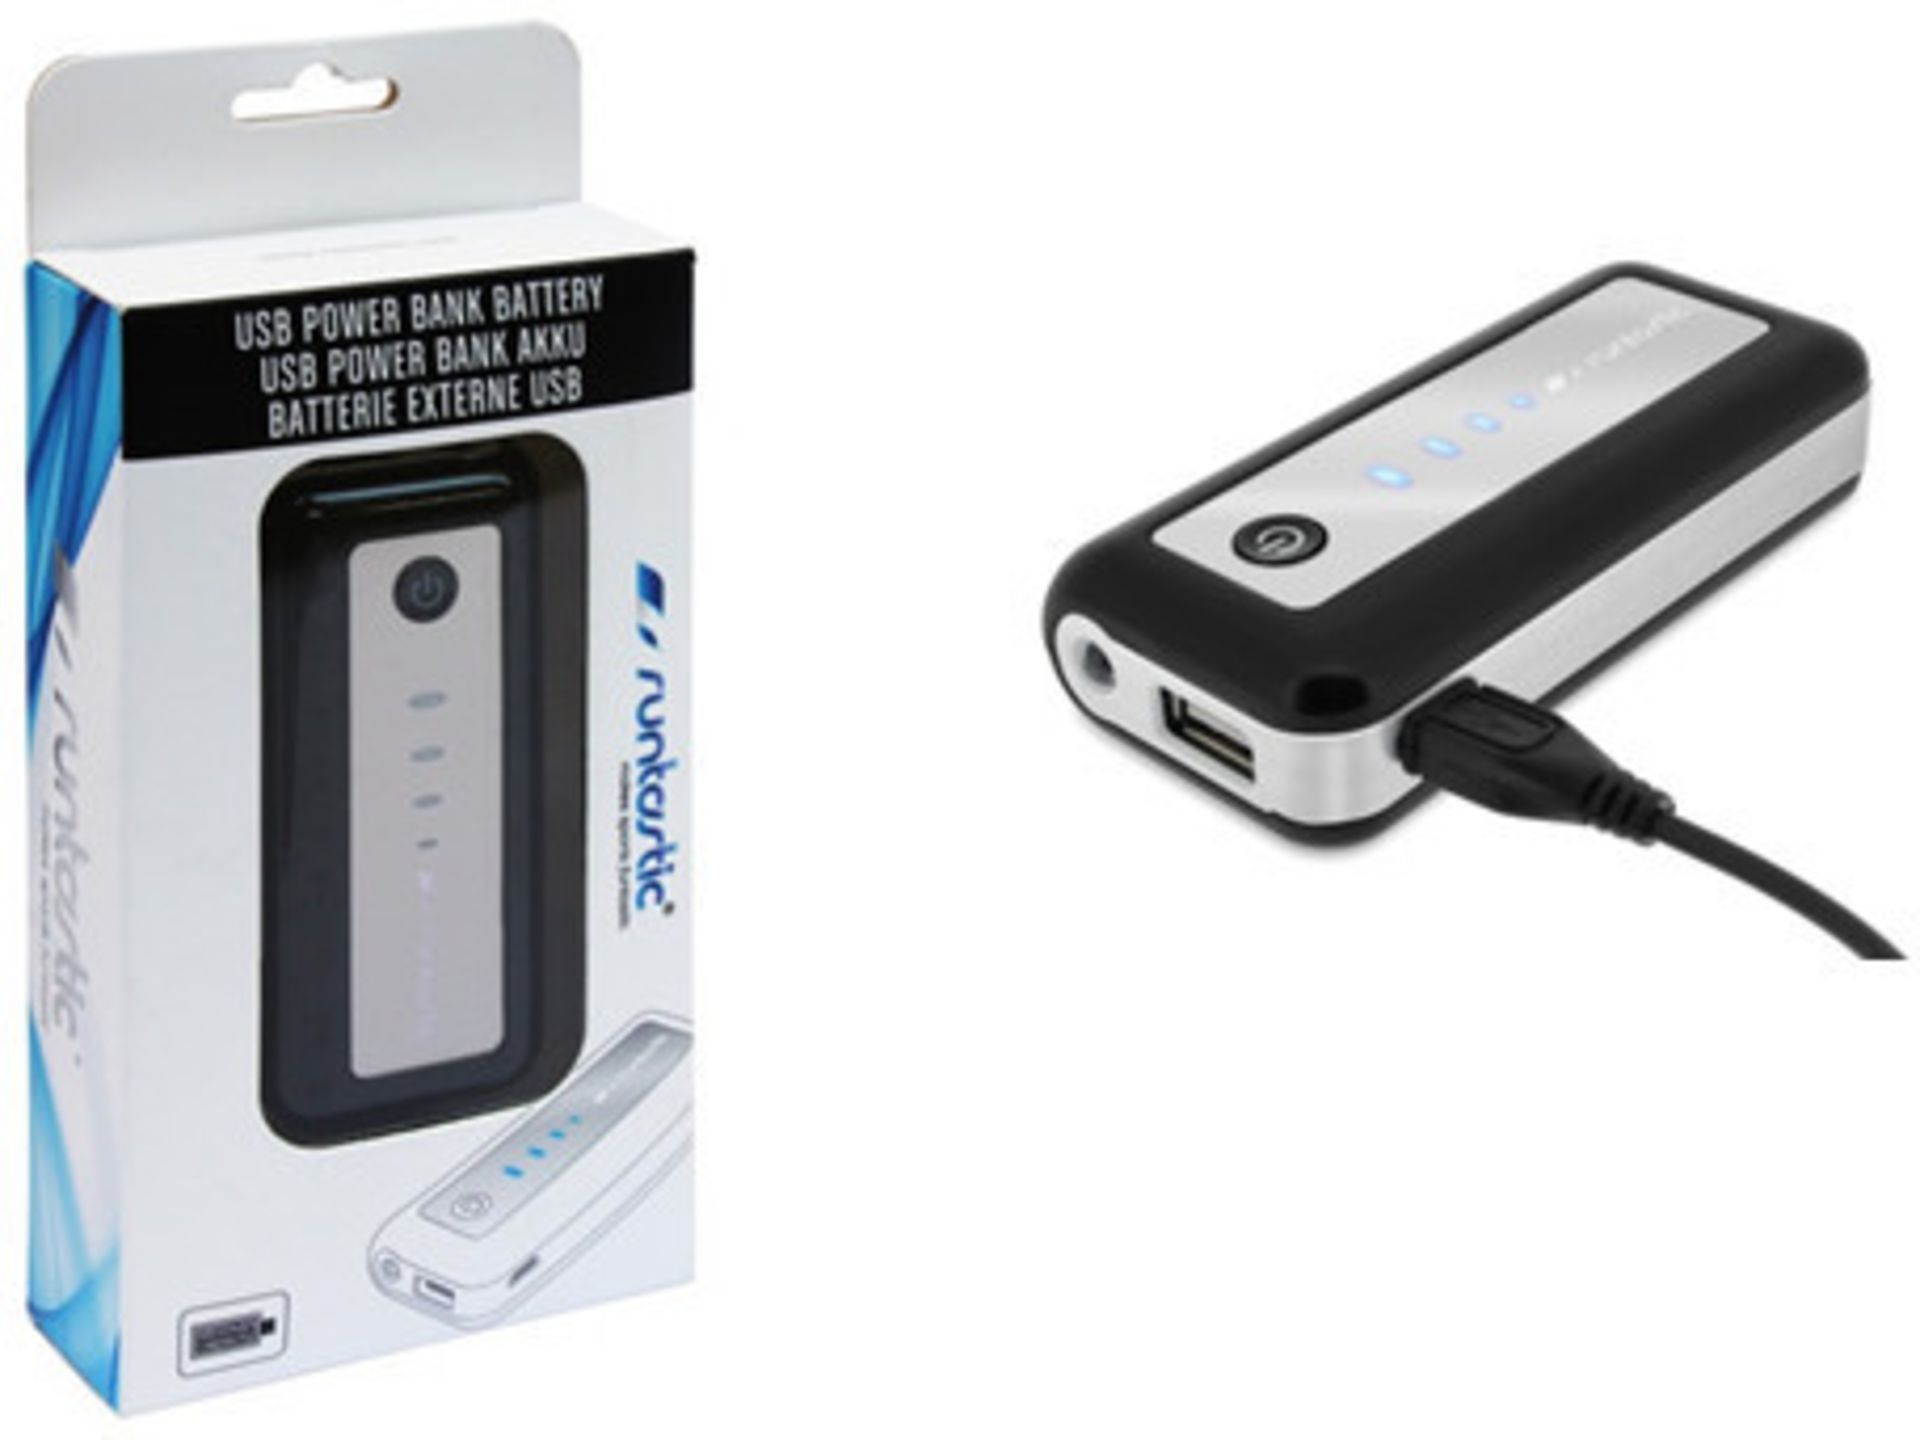 V Brand New Runtastic USB Power Bank With Integrated LED Flashlight eBay Price £43.61 X 2 YOUR BID